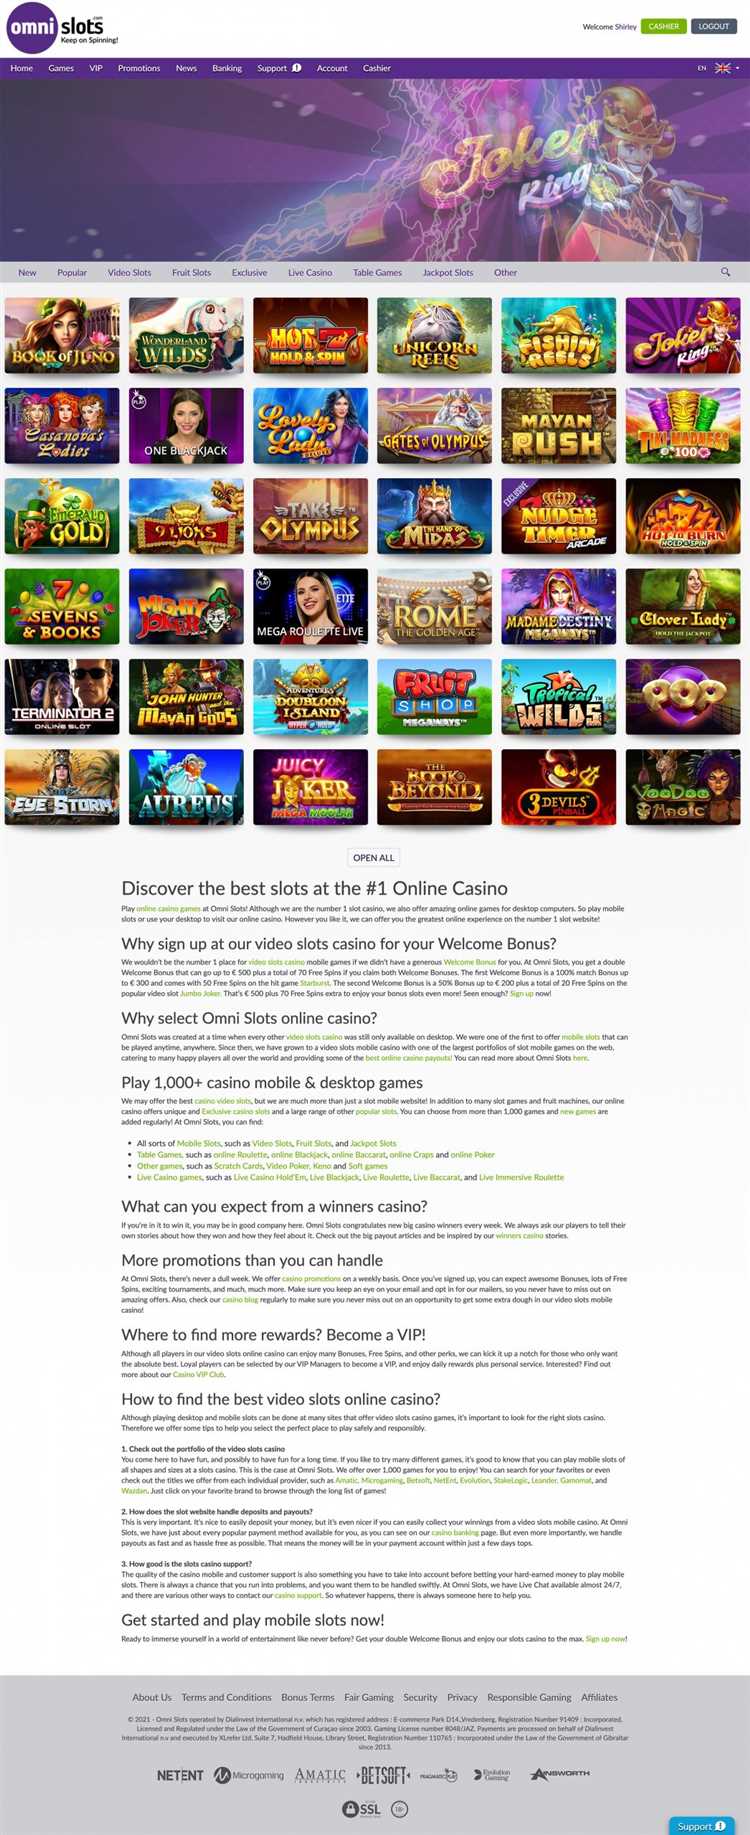 Omni slots casino online